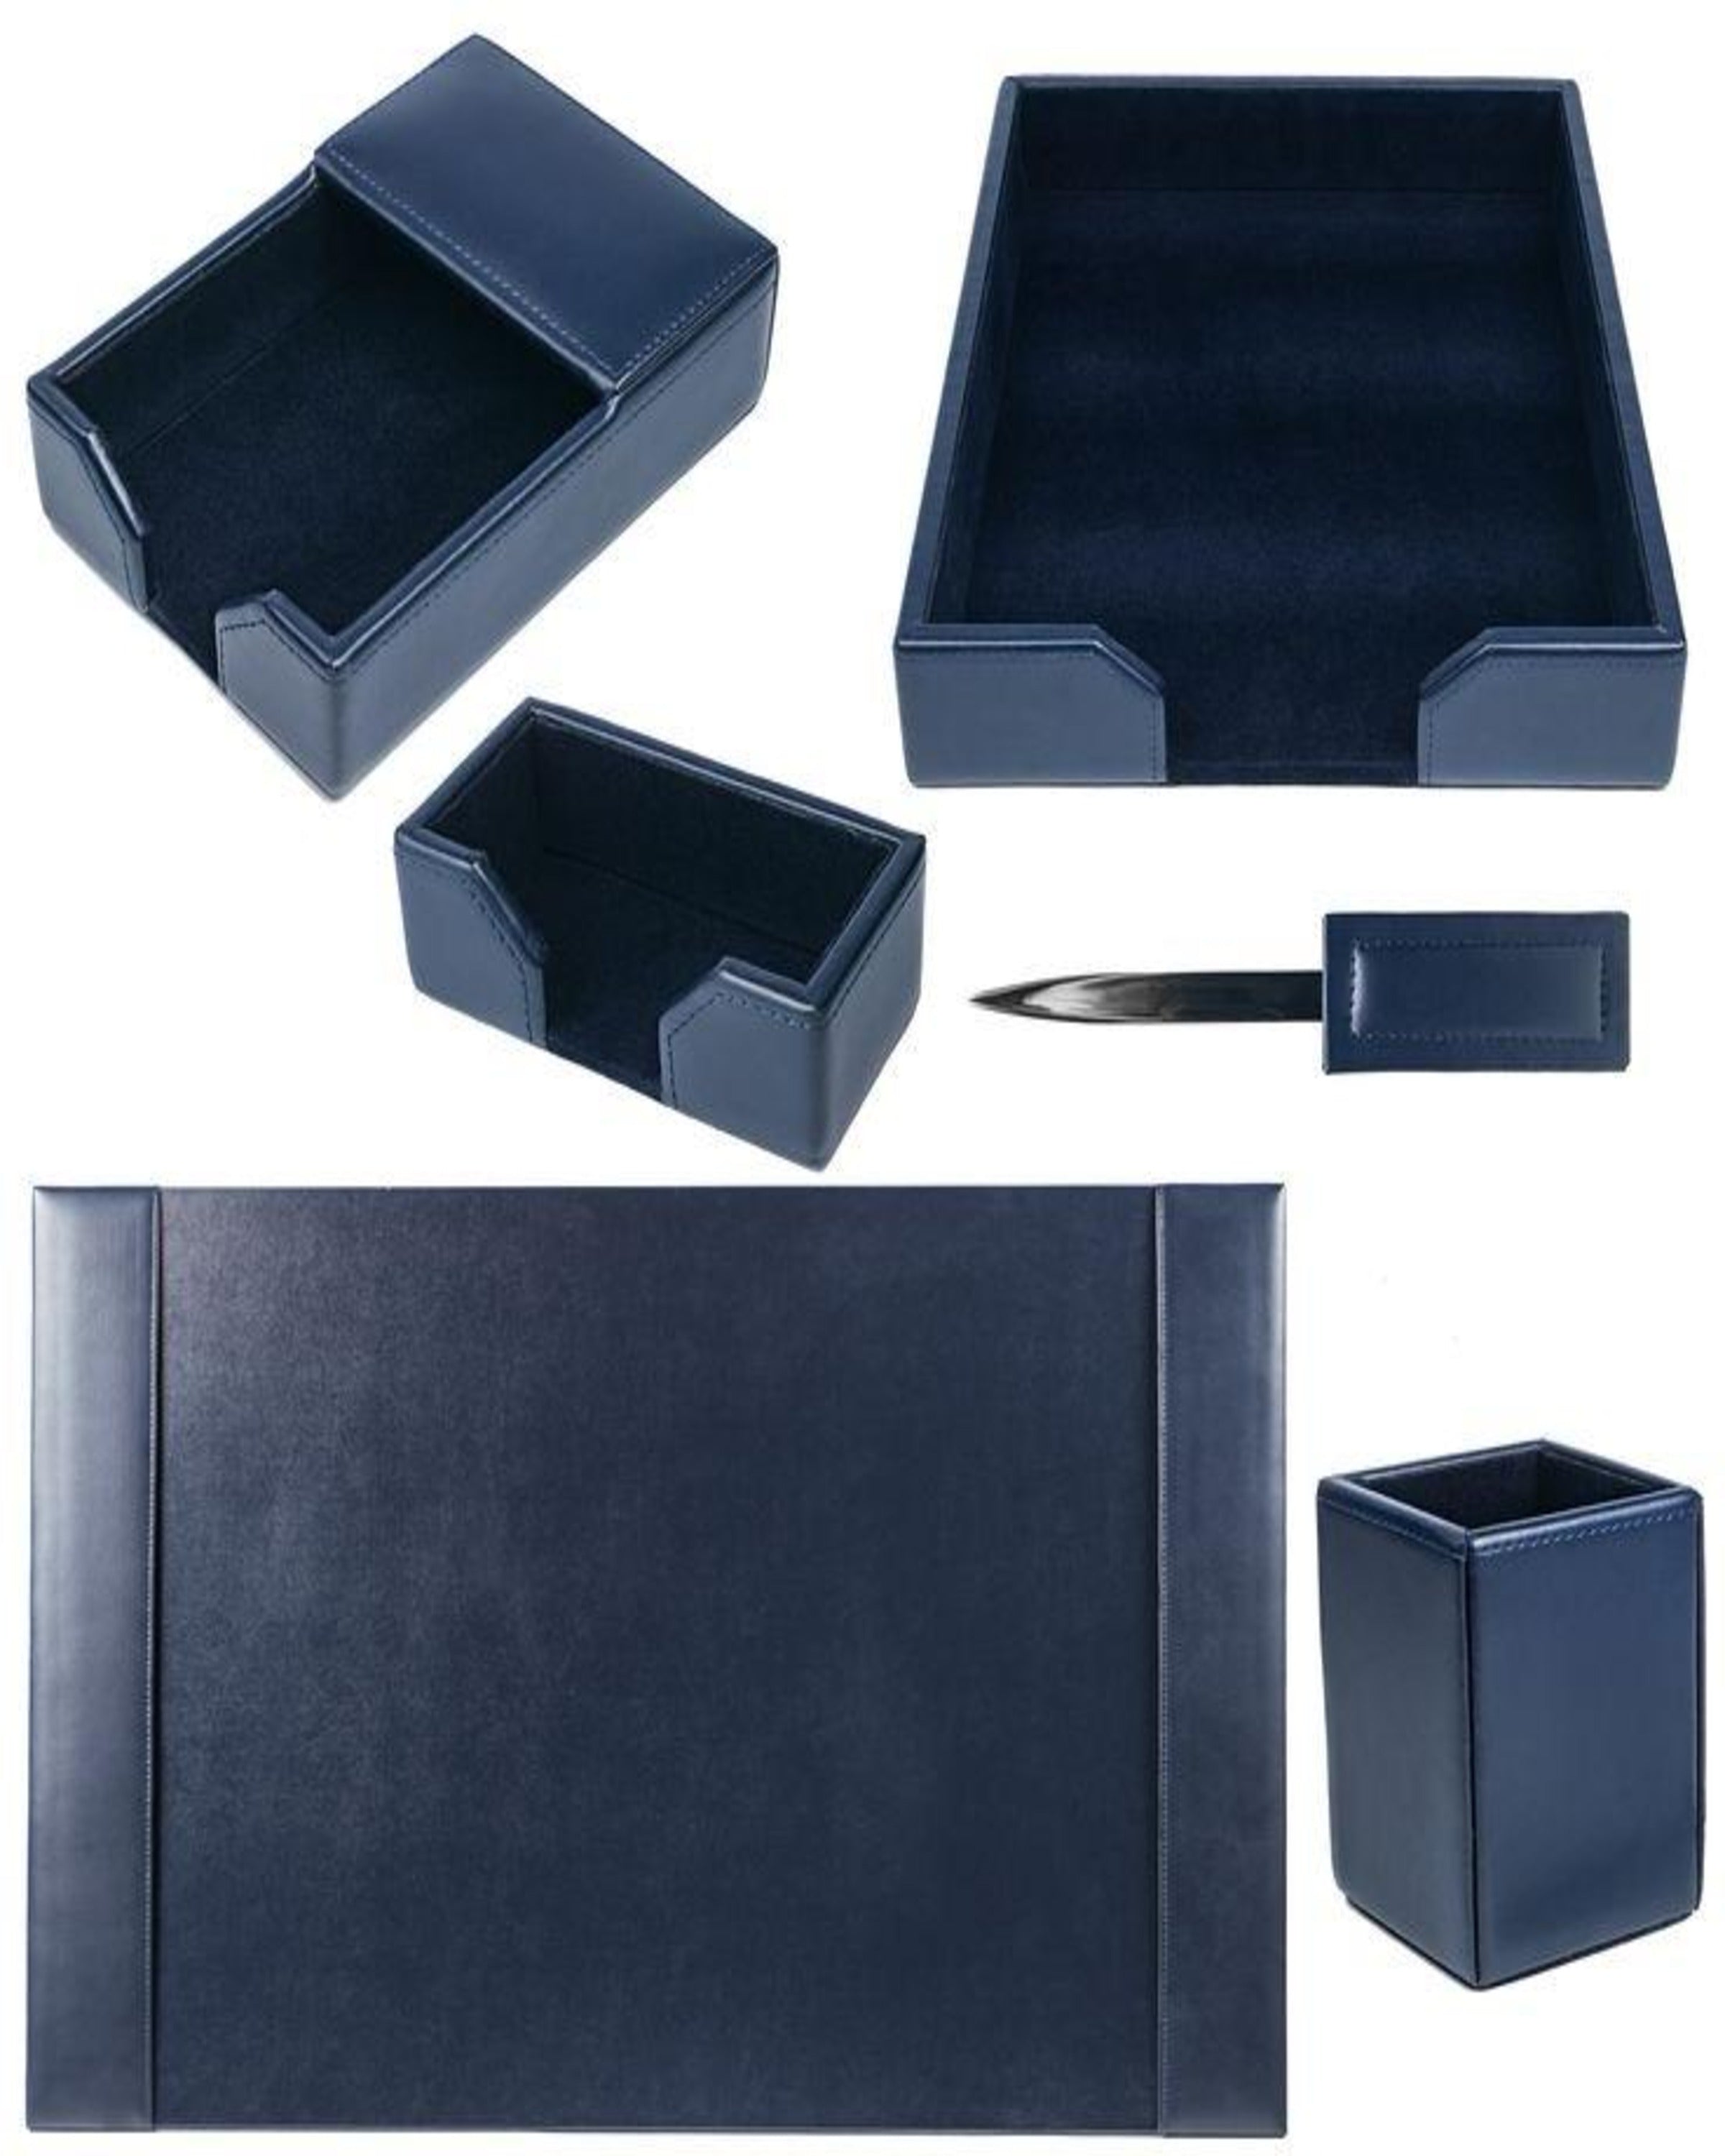 Blue Stylish Office Leather Desk Set ANGIE HOMES